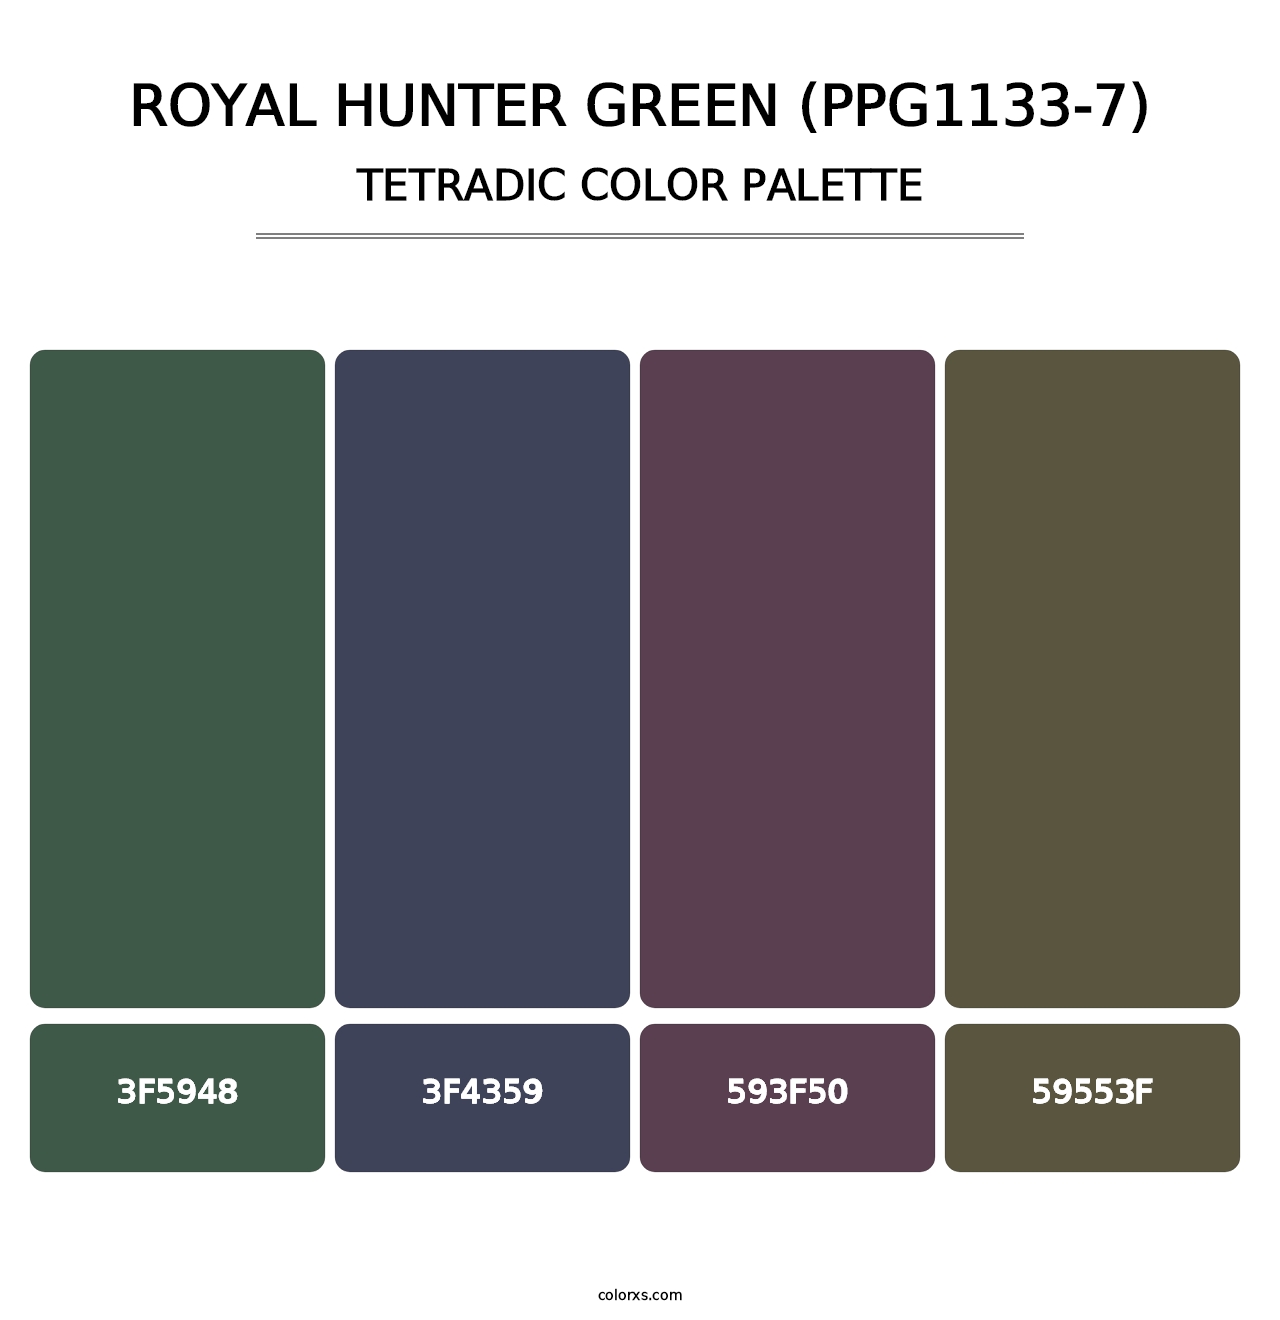 Royal Hunter Green (PPG1133-7) - Tetradic Color Palette